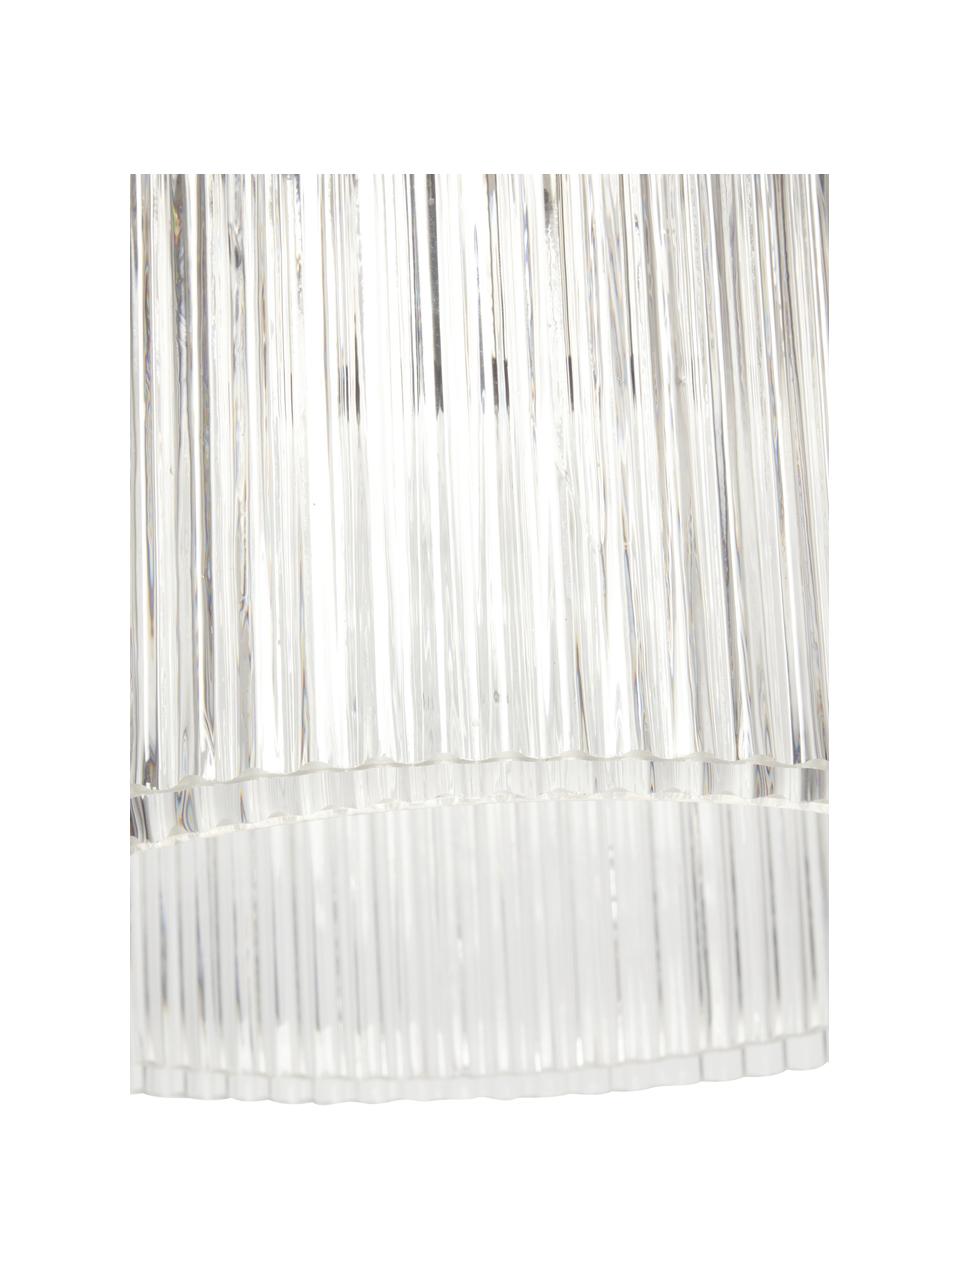 Glazen hanglamp Rimpel met geribbeld oppervlak, Lampenkap: glas, Fitting: vermessingd metaal, Baldakijn: vermessingd metaal, Transparant, Ø 41 x H 32 cm